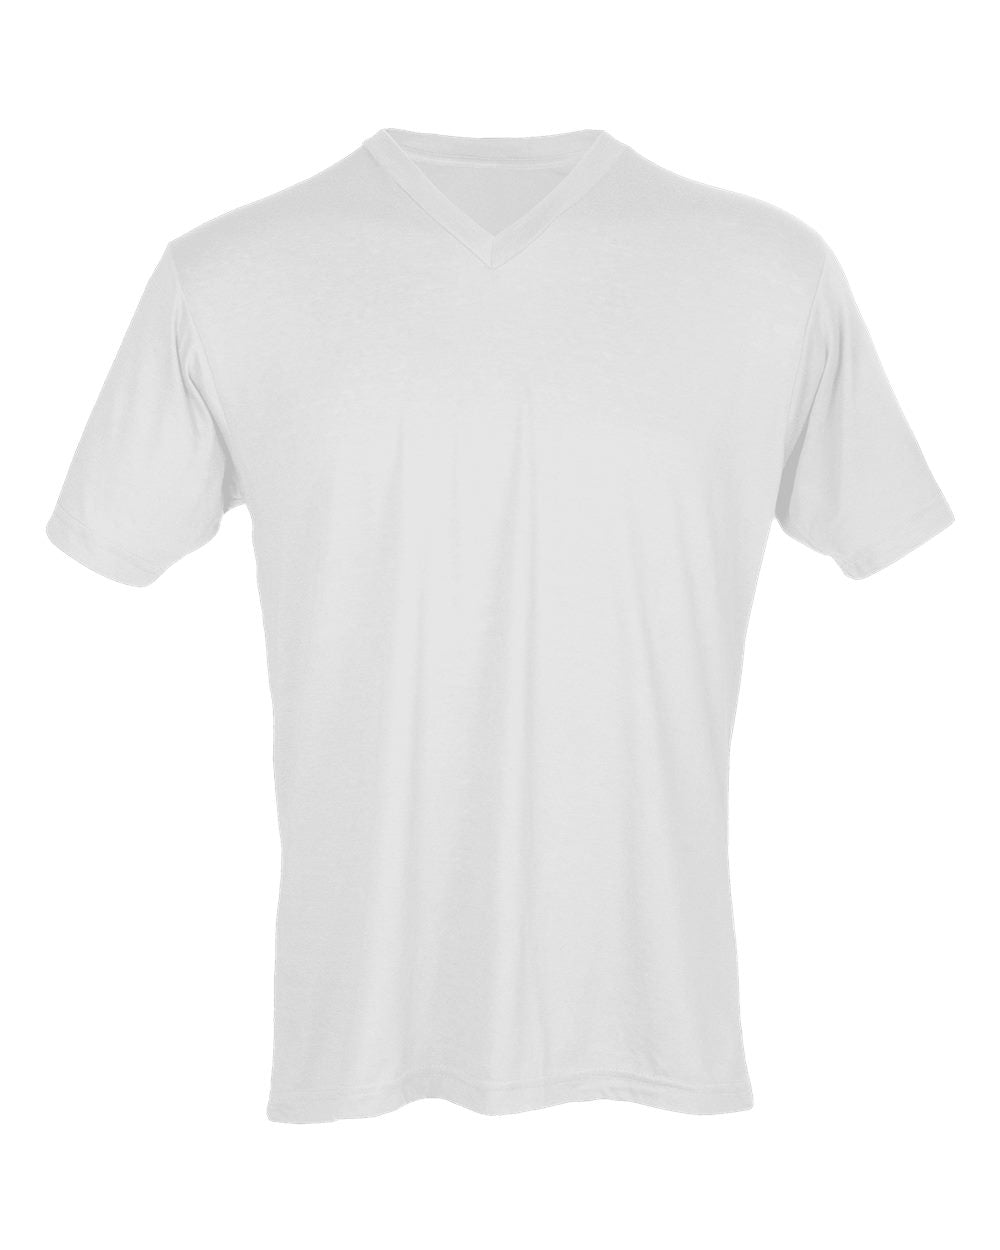 Tultex 207 - Unisex Poly-Rich V-Neck T-Shirt